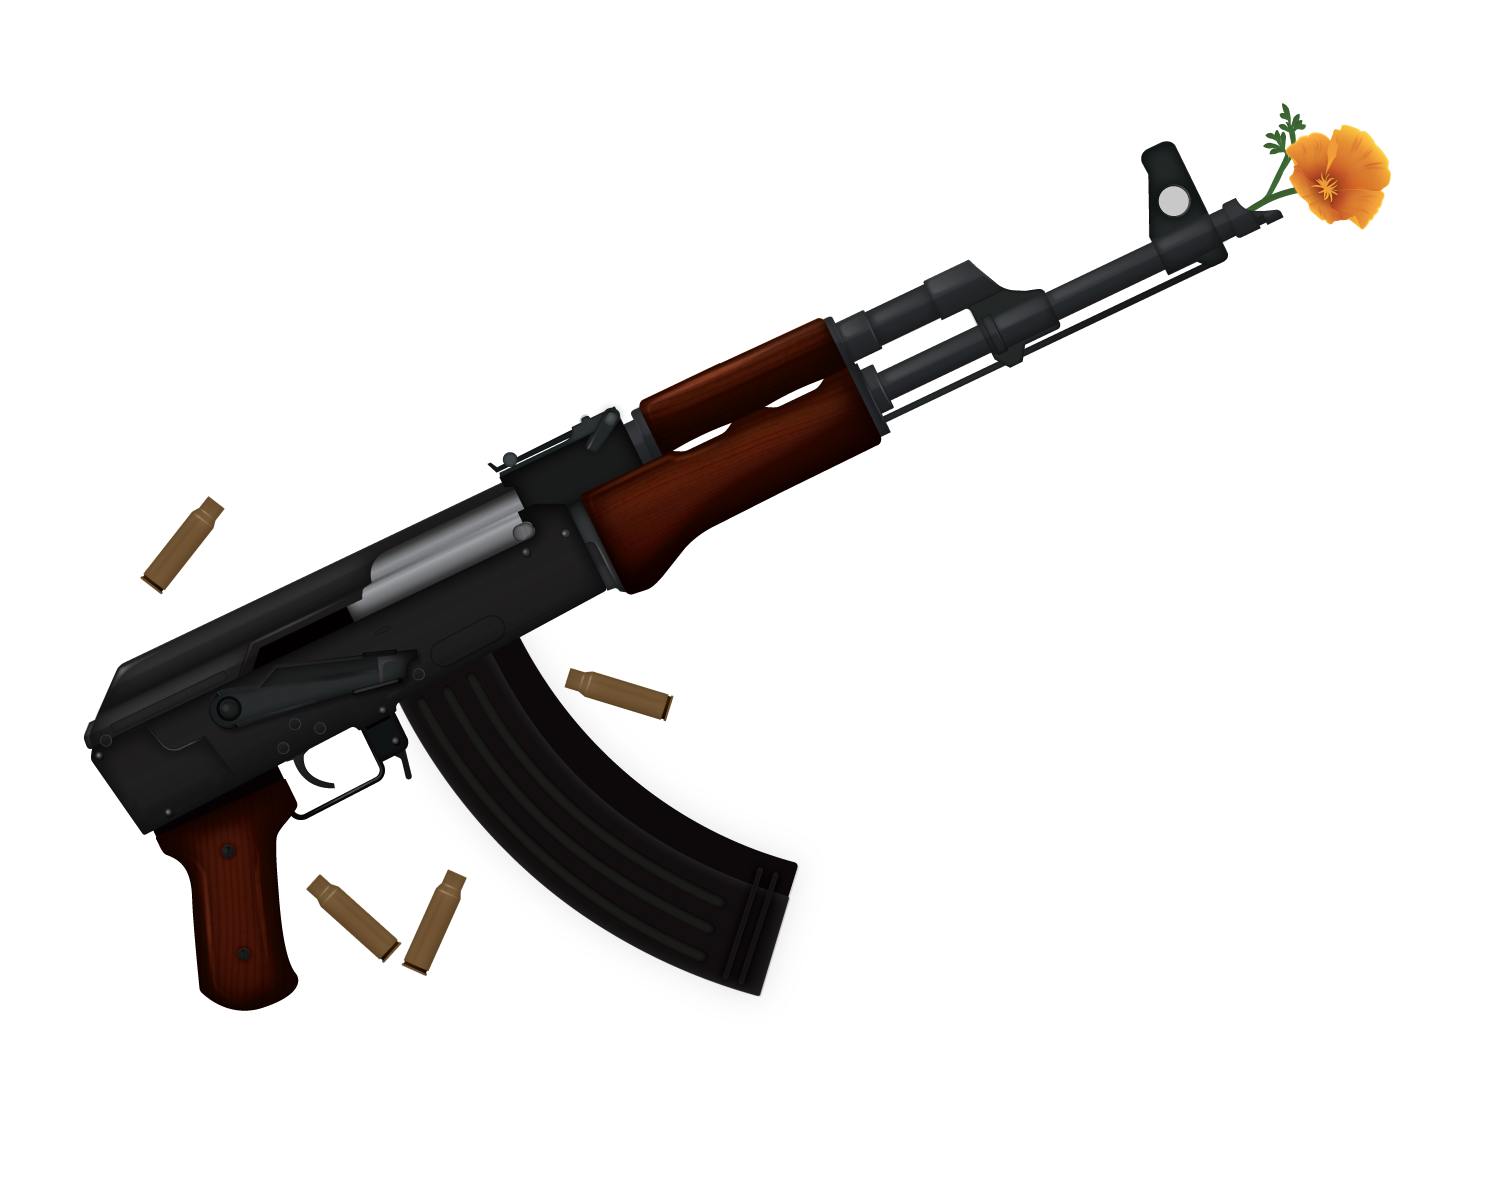 An illustration of an AK-47